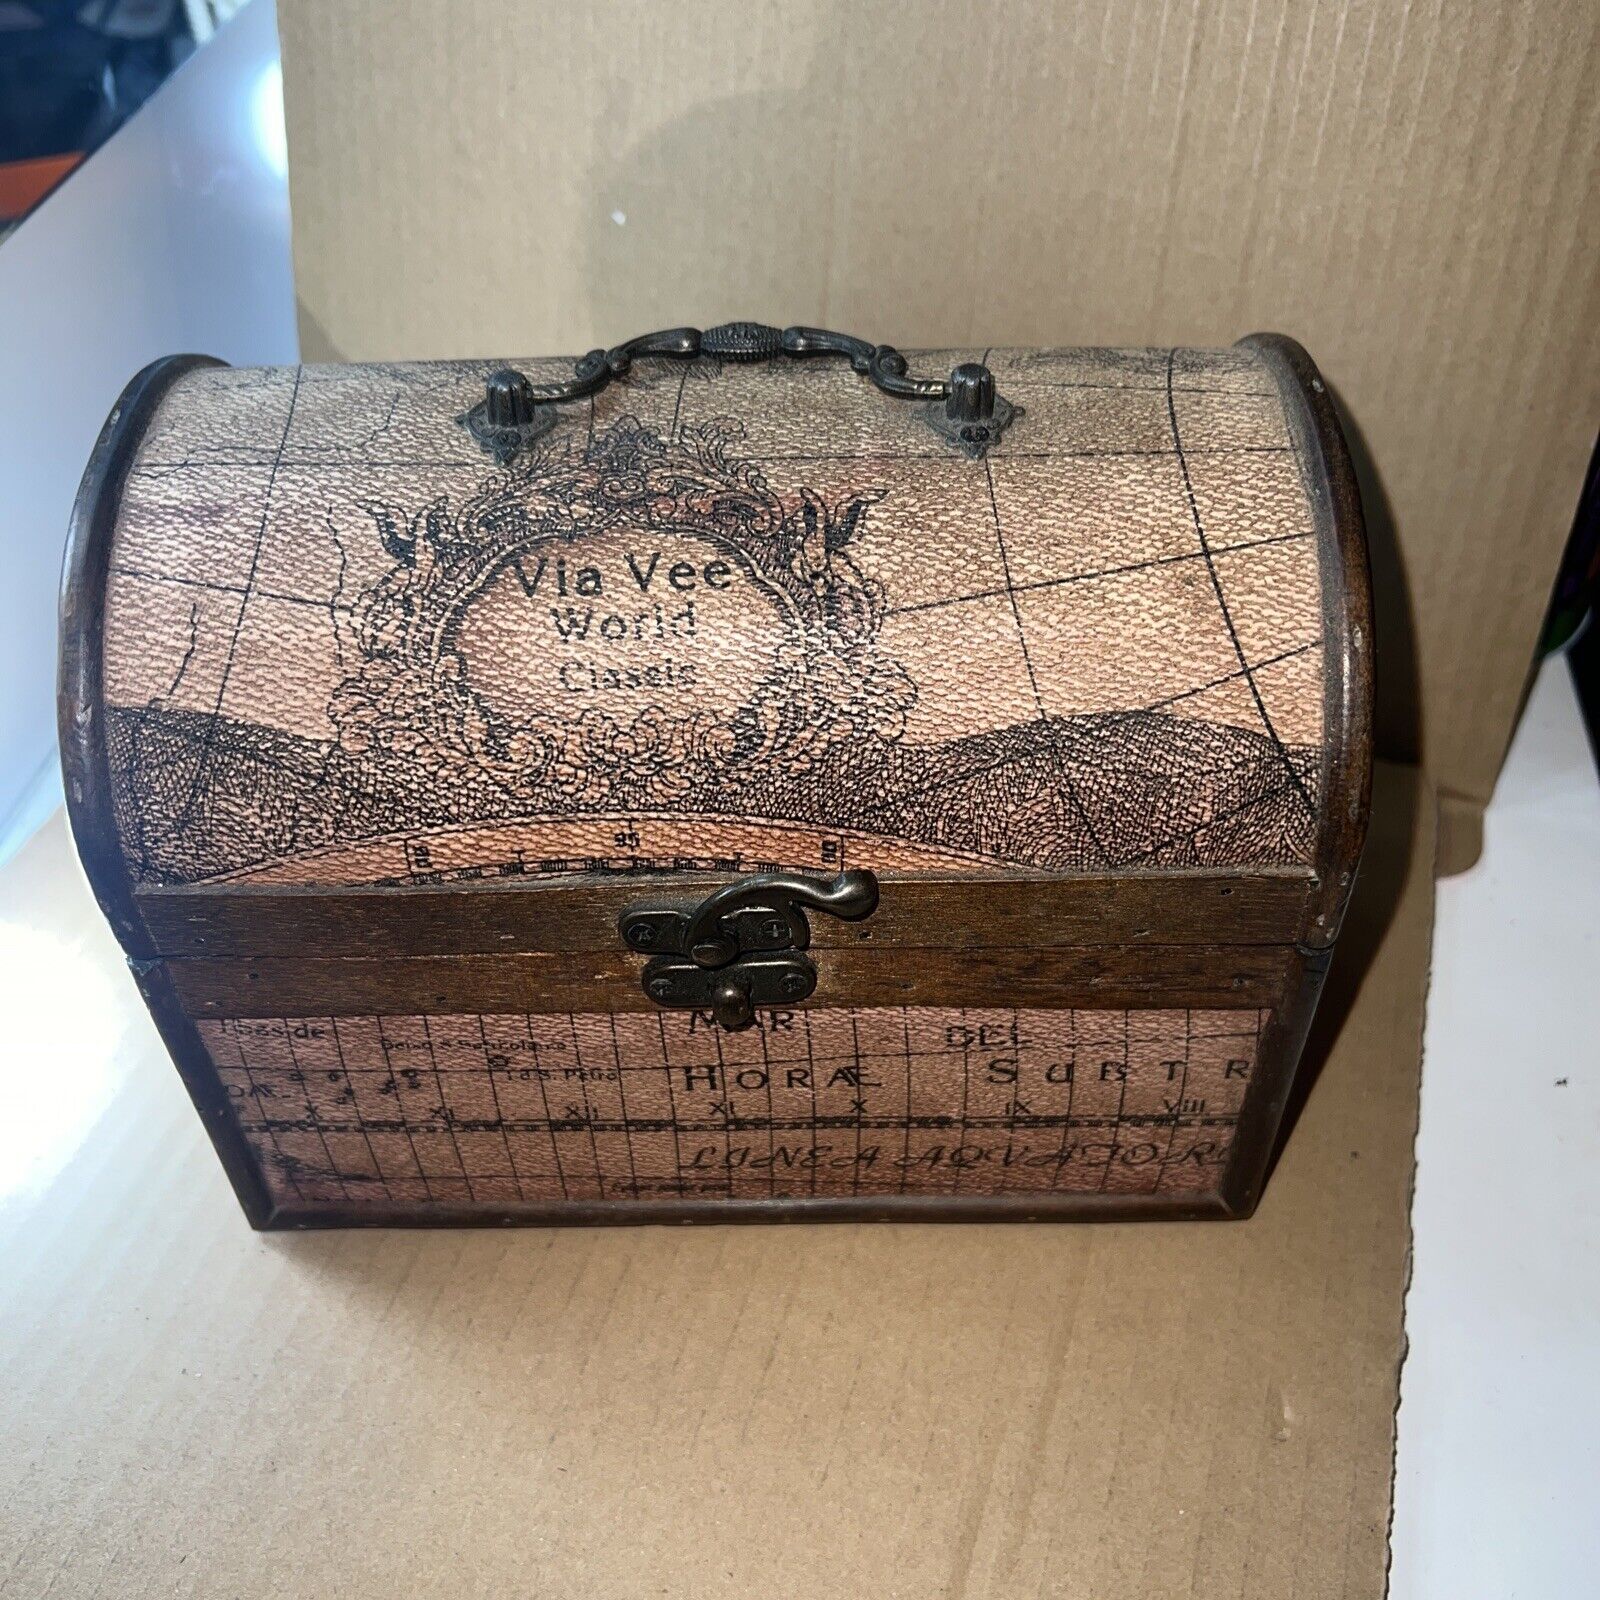 Vintage Wooden Decorative Trinket Boxes Small Storage Jewelry Box Treasure Chest